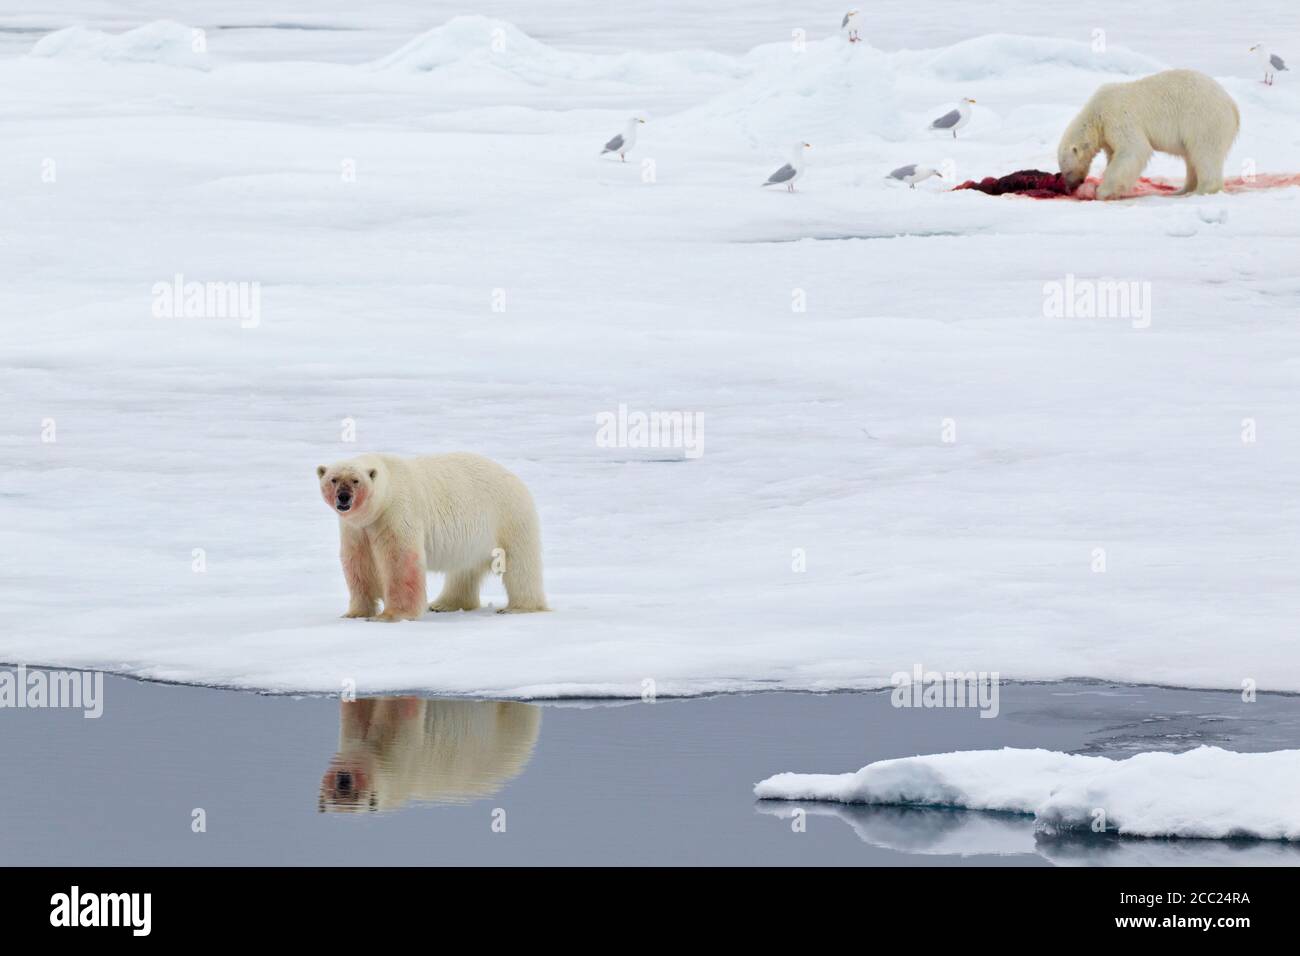 Europe, Norway, Svalbard, Polar bear with birds eating killed seal Stock Photo